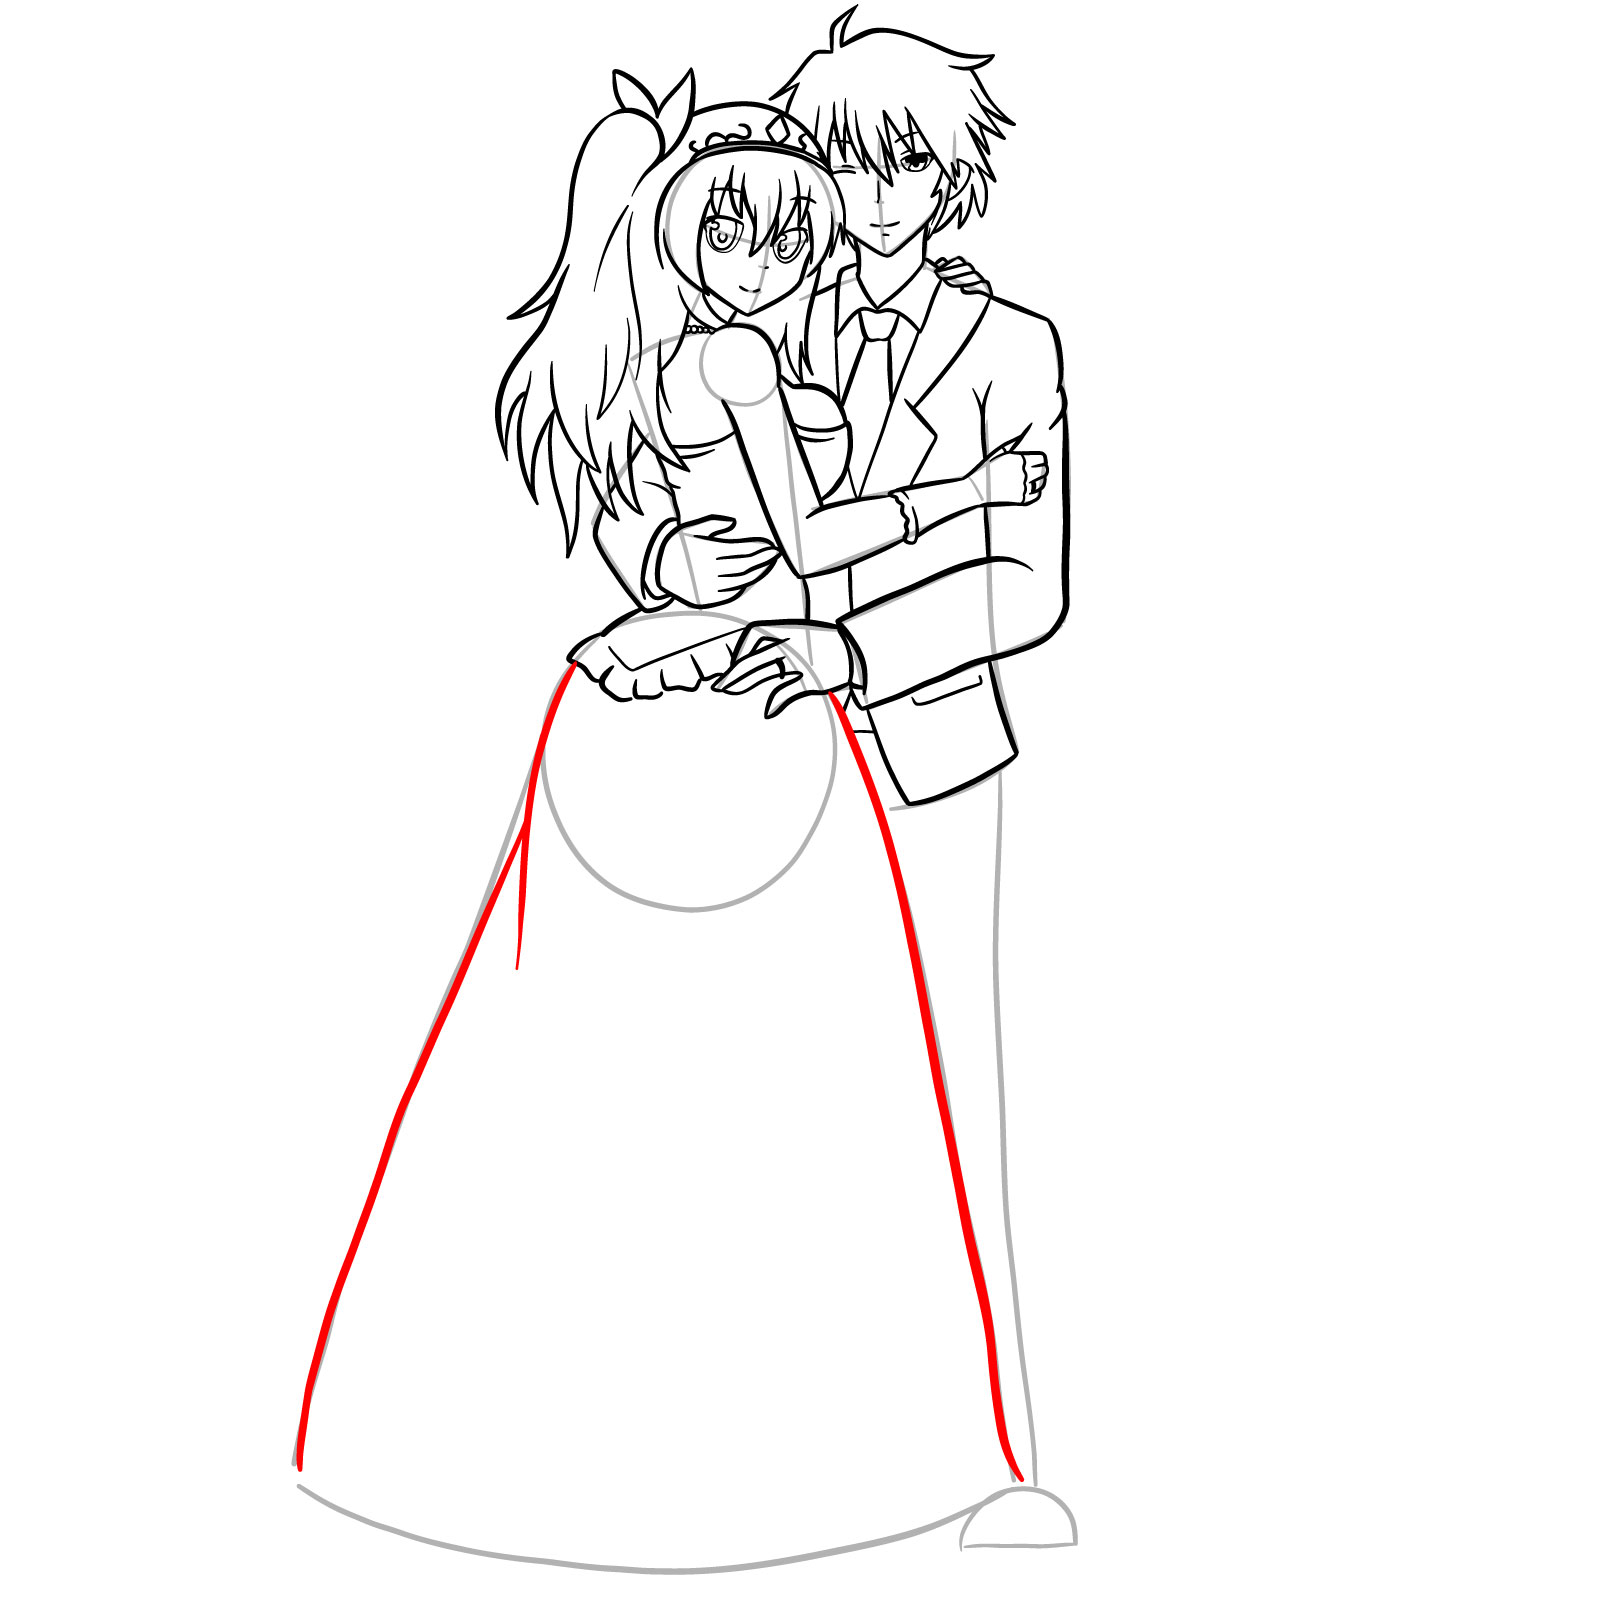 How to draw Ikki and Stella's wedding - step 48